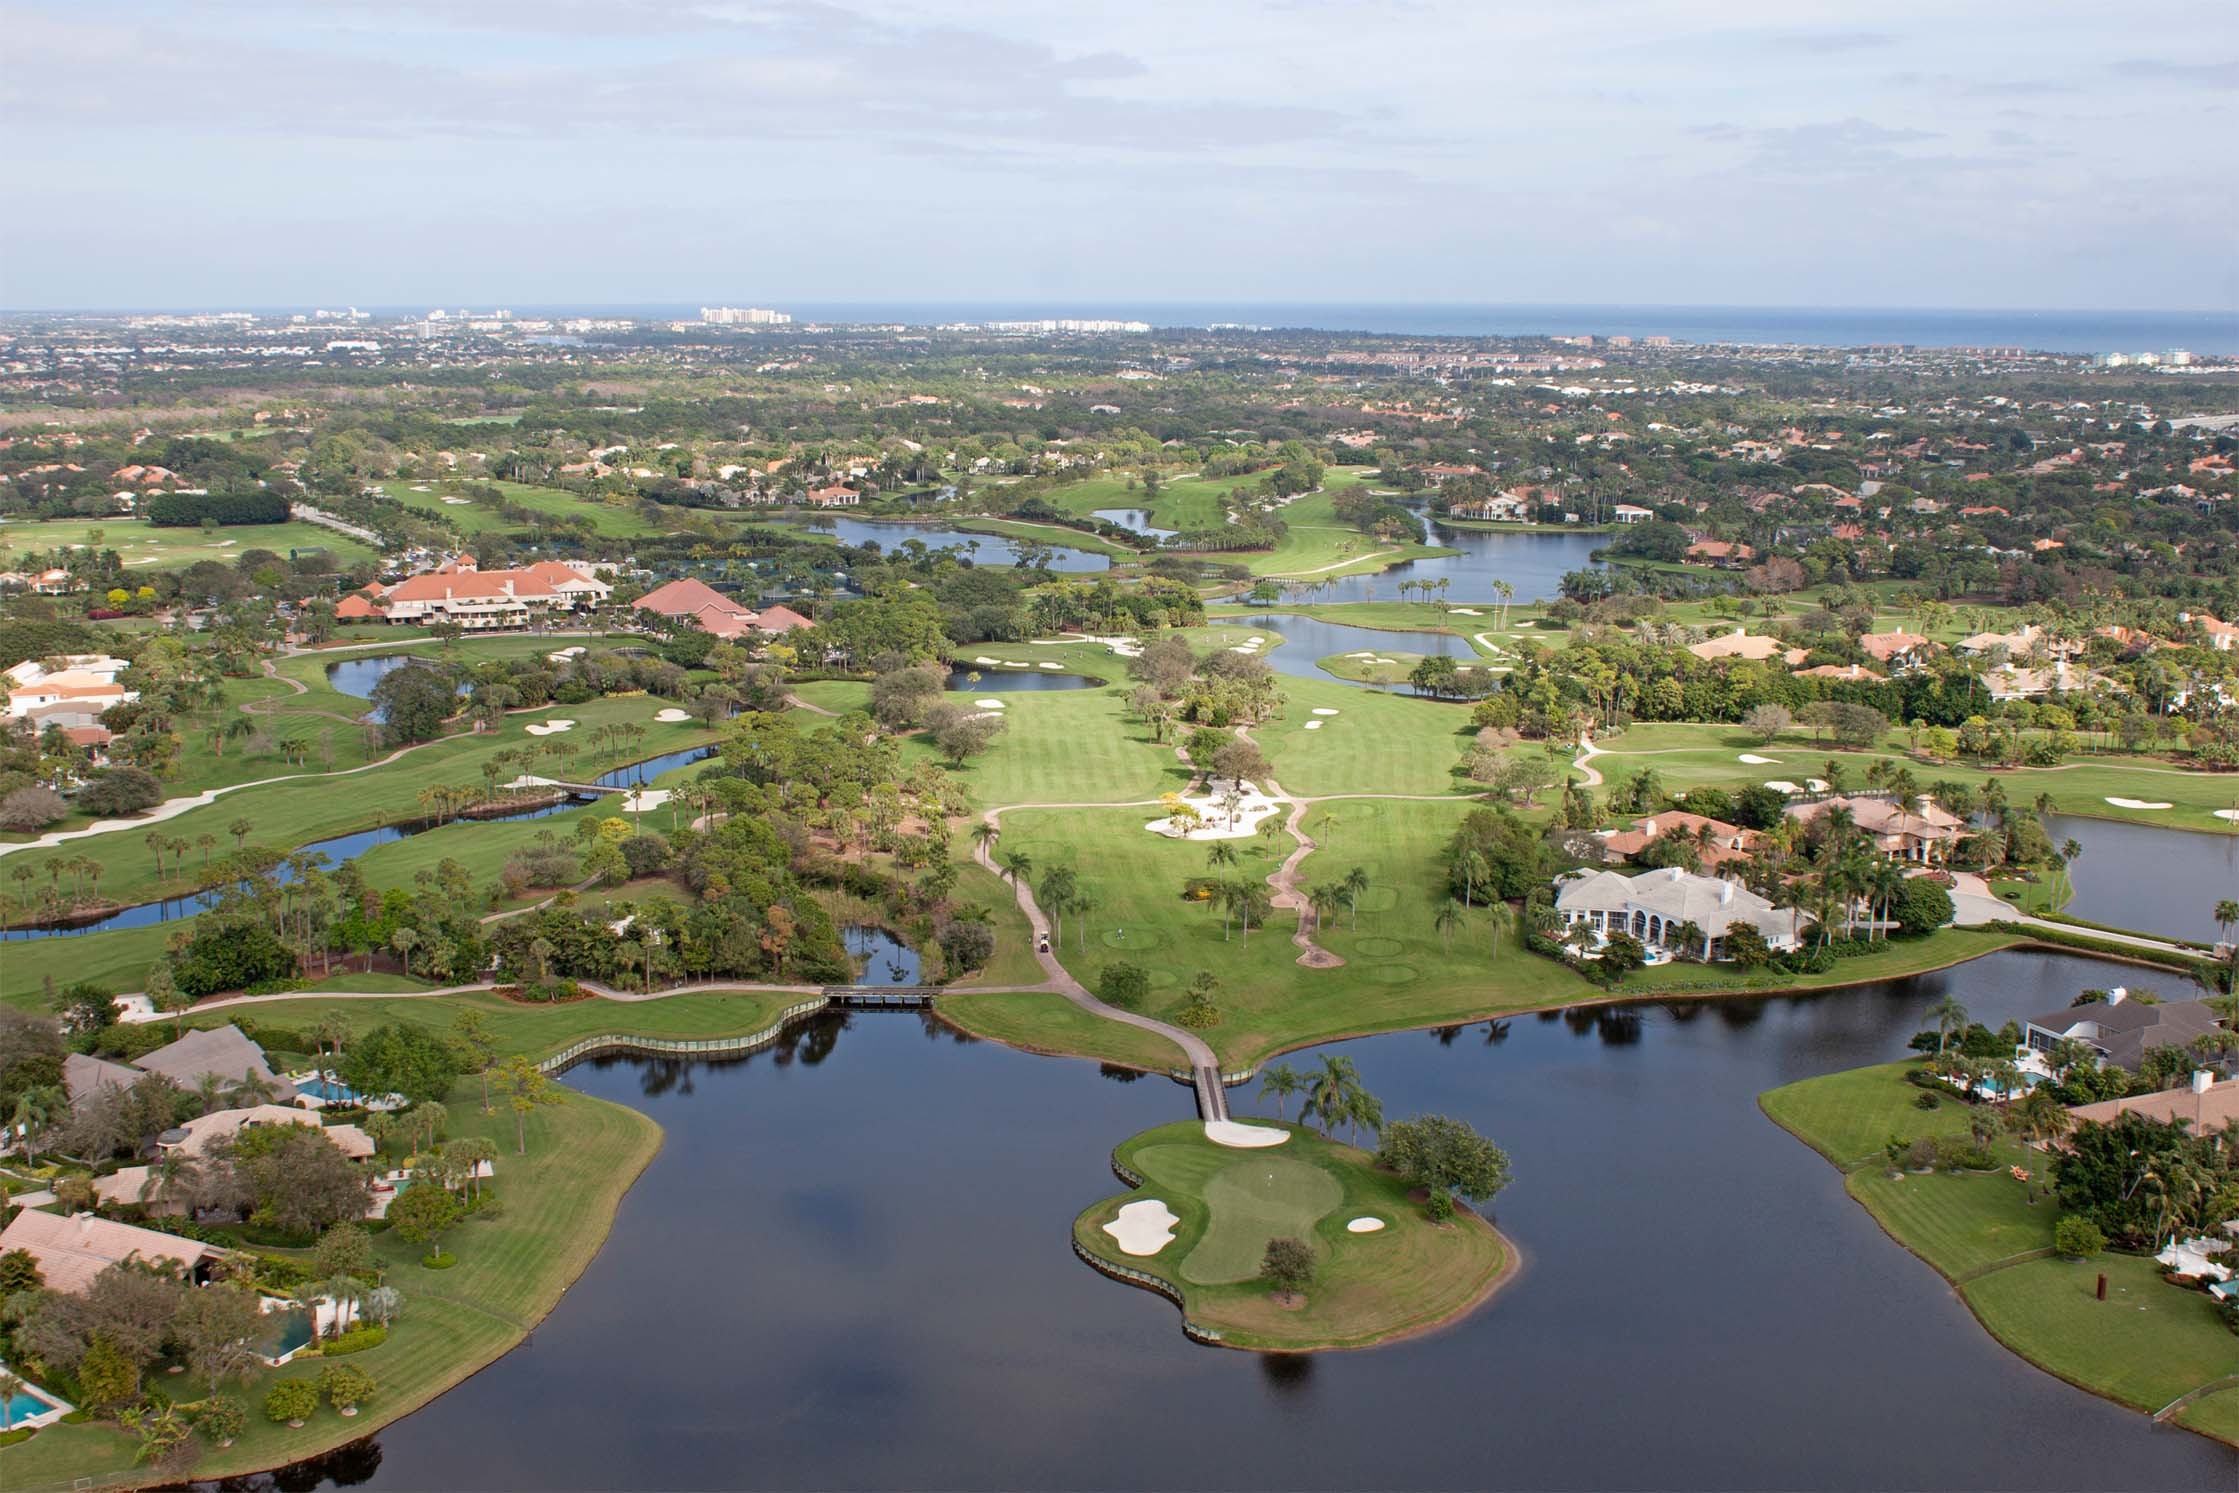 Golf Club Homes For Sale | Golf Community Homes For Sale Palm Beach Gardens FL Jupiter FL